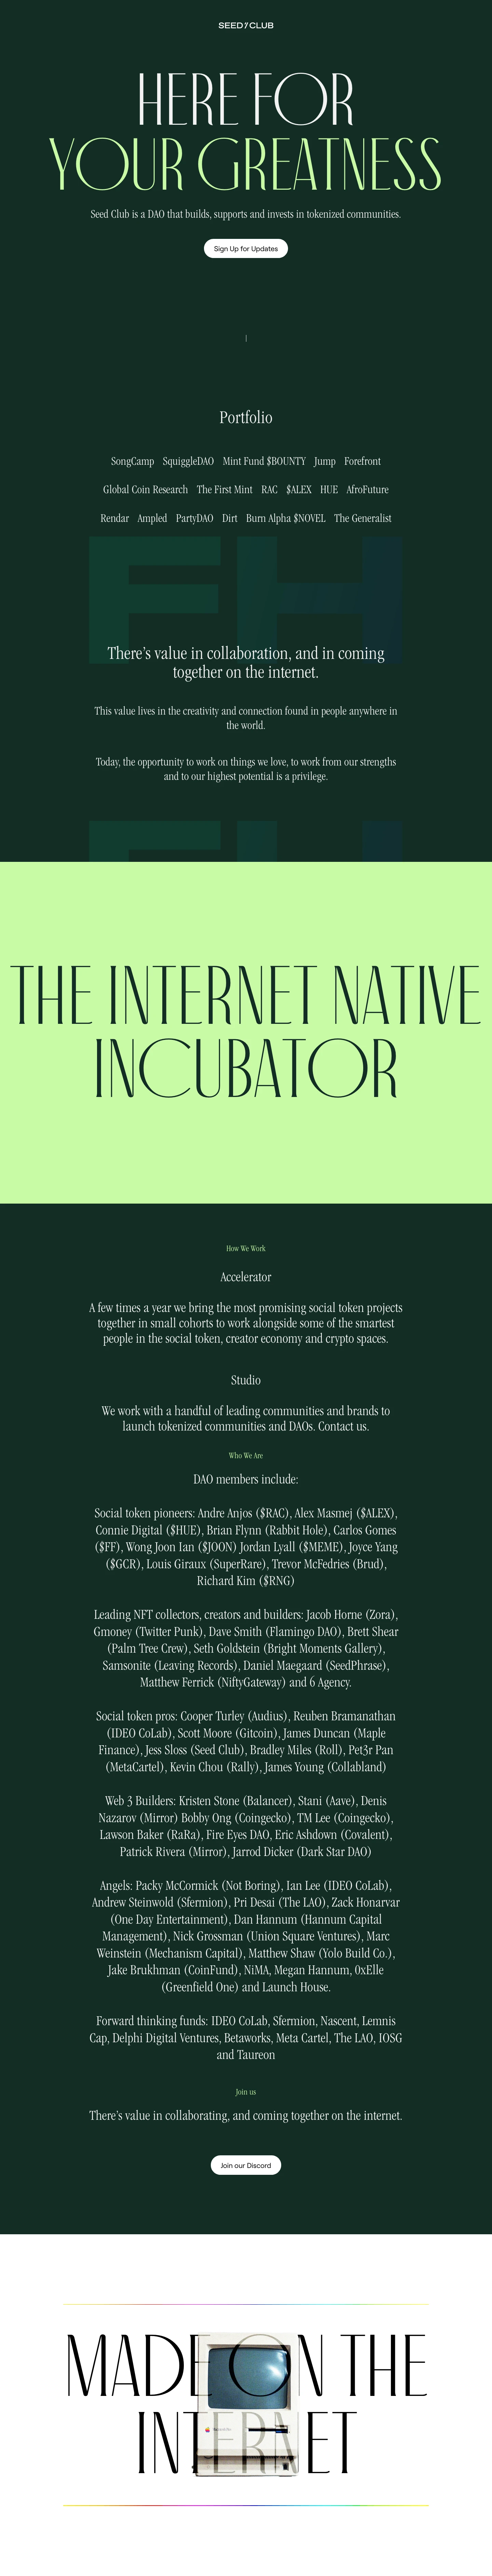 Seed Club Landing Page Example: We help creators turn social capital into digital assets.